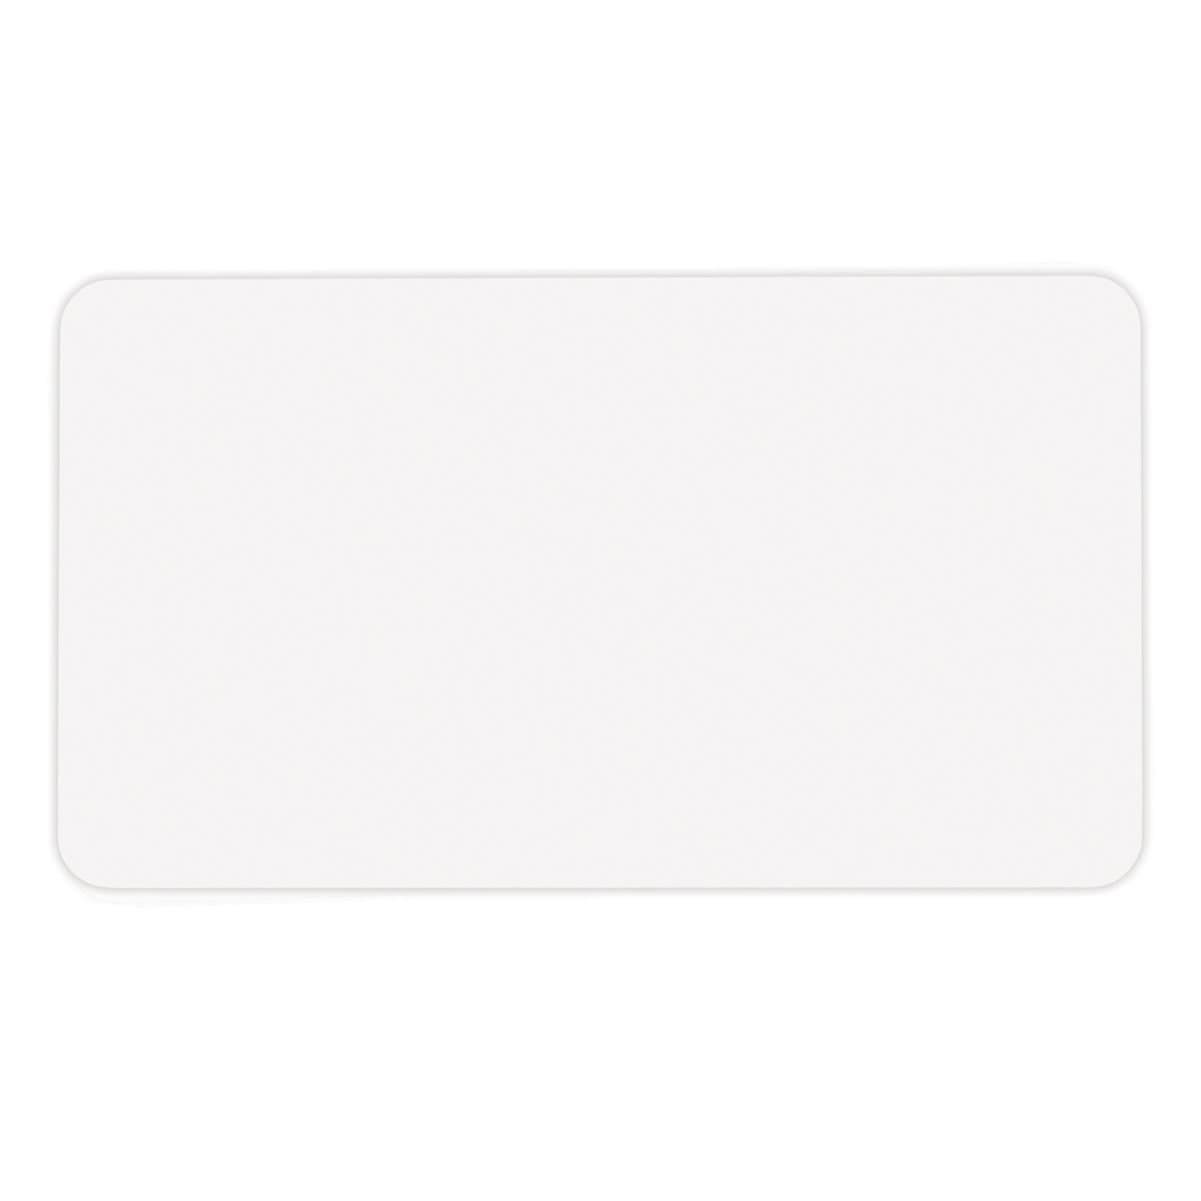 White (04101) Thermal-printable Non-expiring Printable Adhesive Badges, Box of 1000 (P/N 0408X) 04101